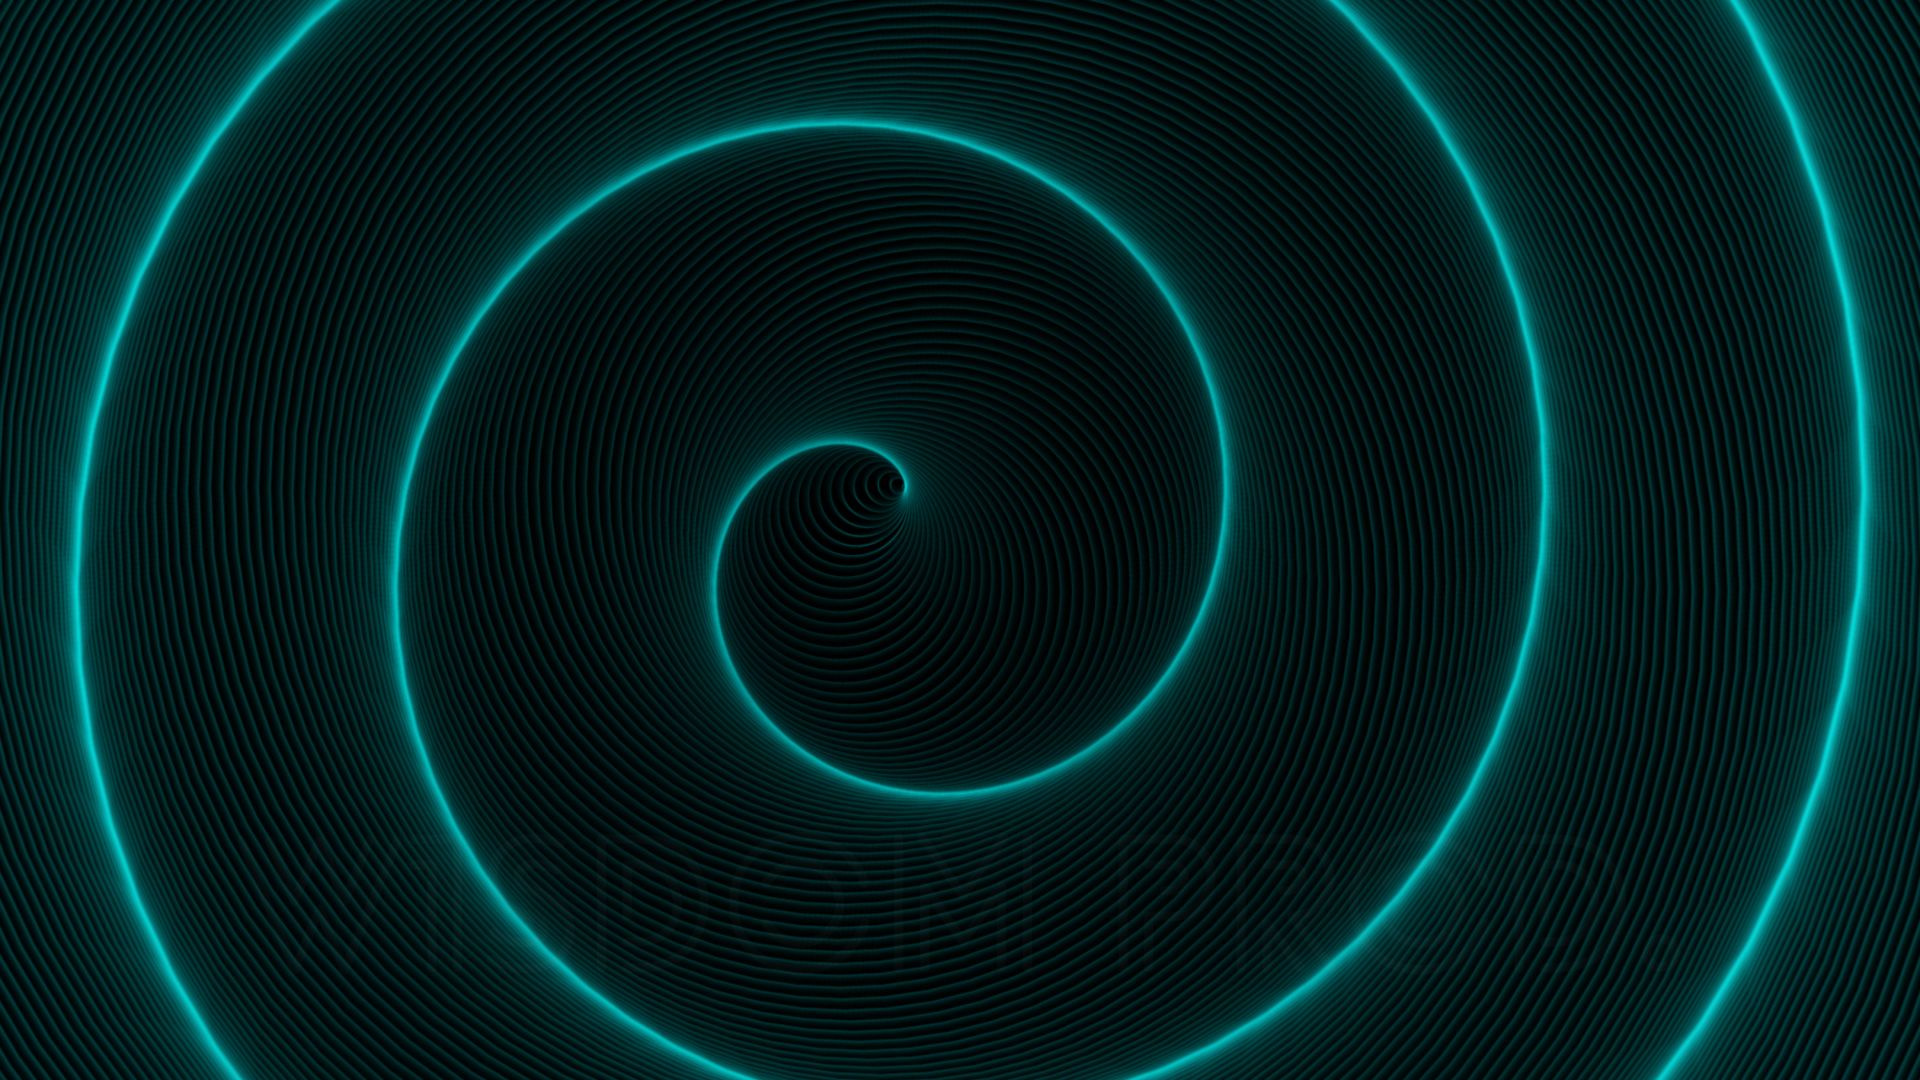 Endless Spiral Rotating Infinite Circular Glowing Tunnel